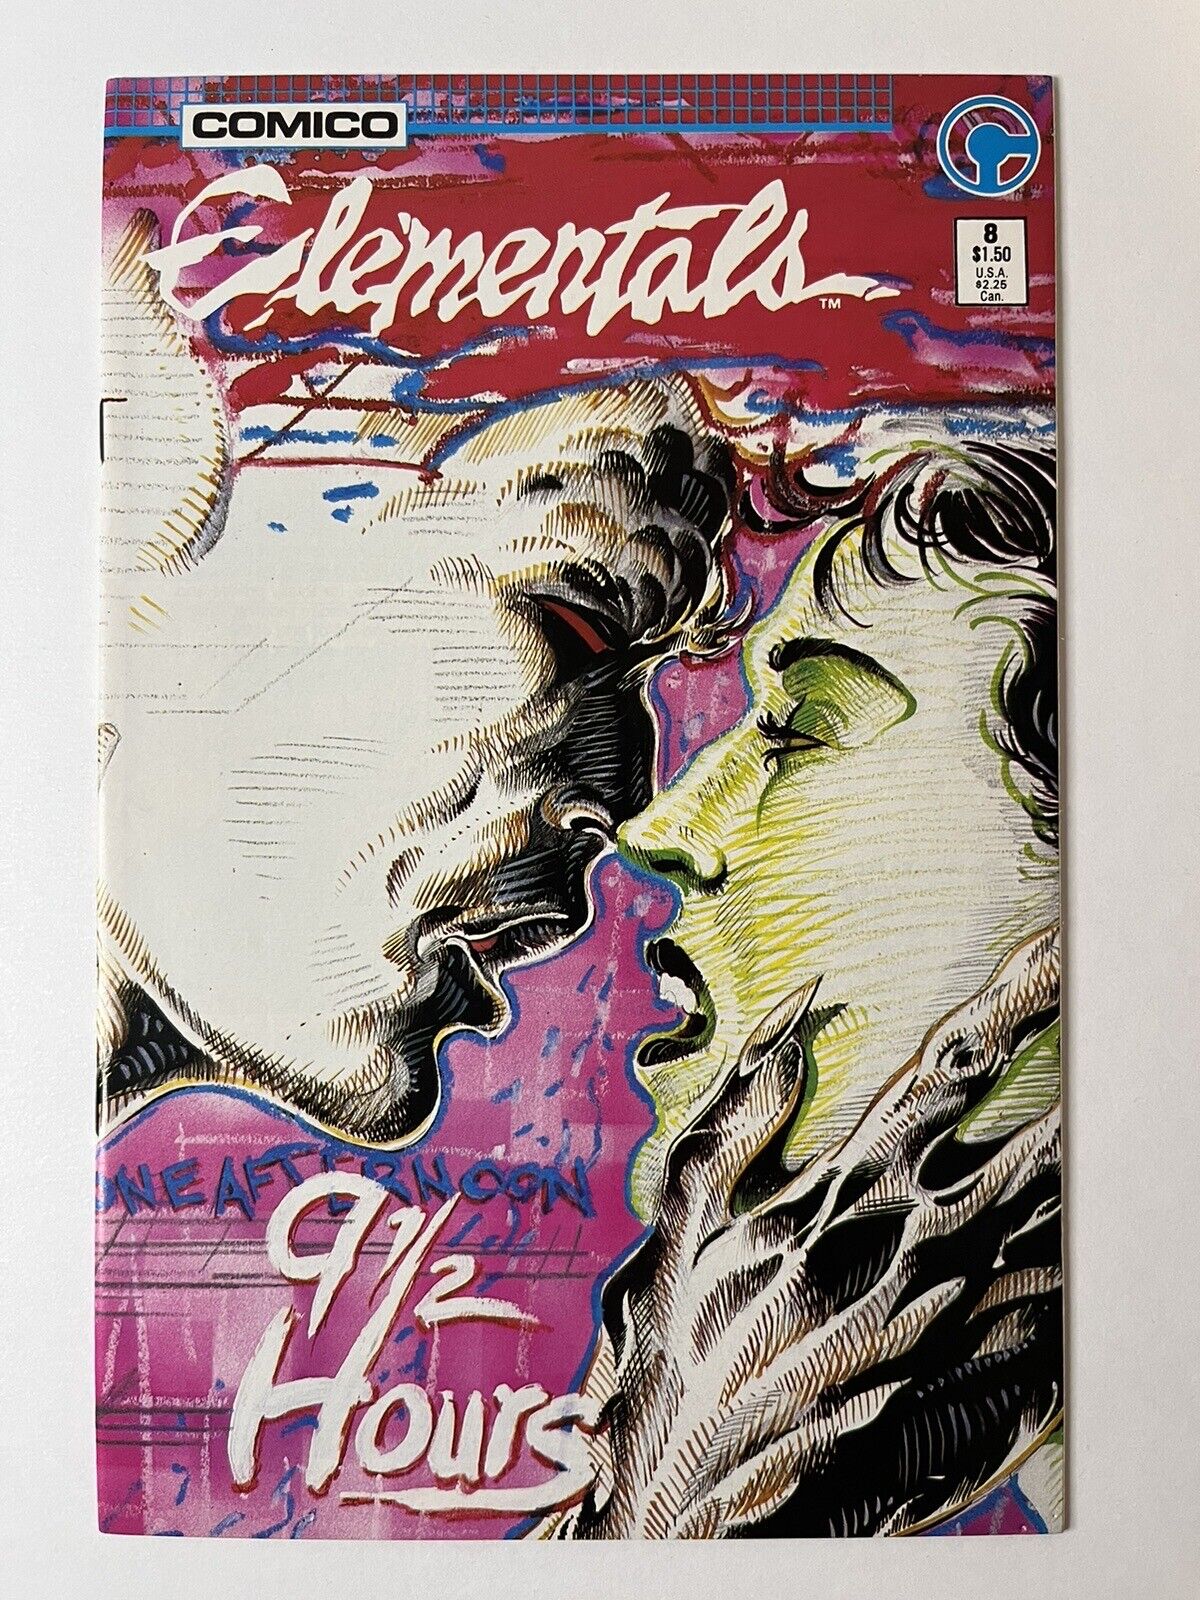 Elementals #8 June 1986 ✅ Bill Willingham ✅ Comico Comics ✅ Copper Age